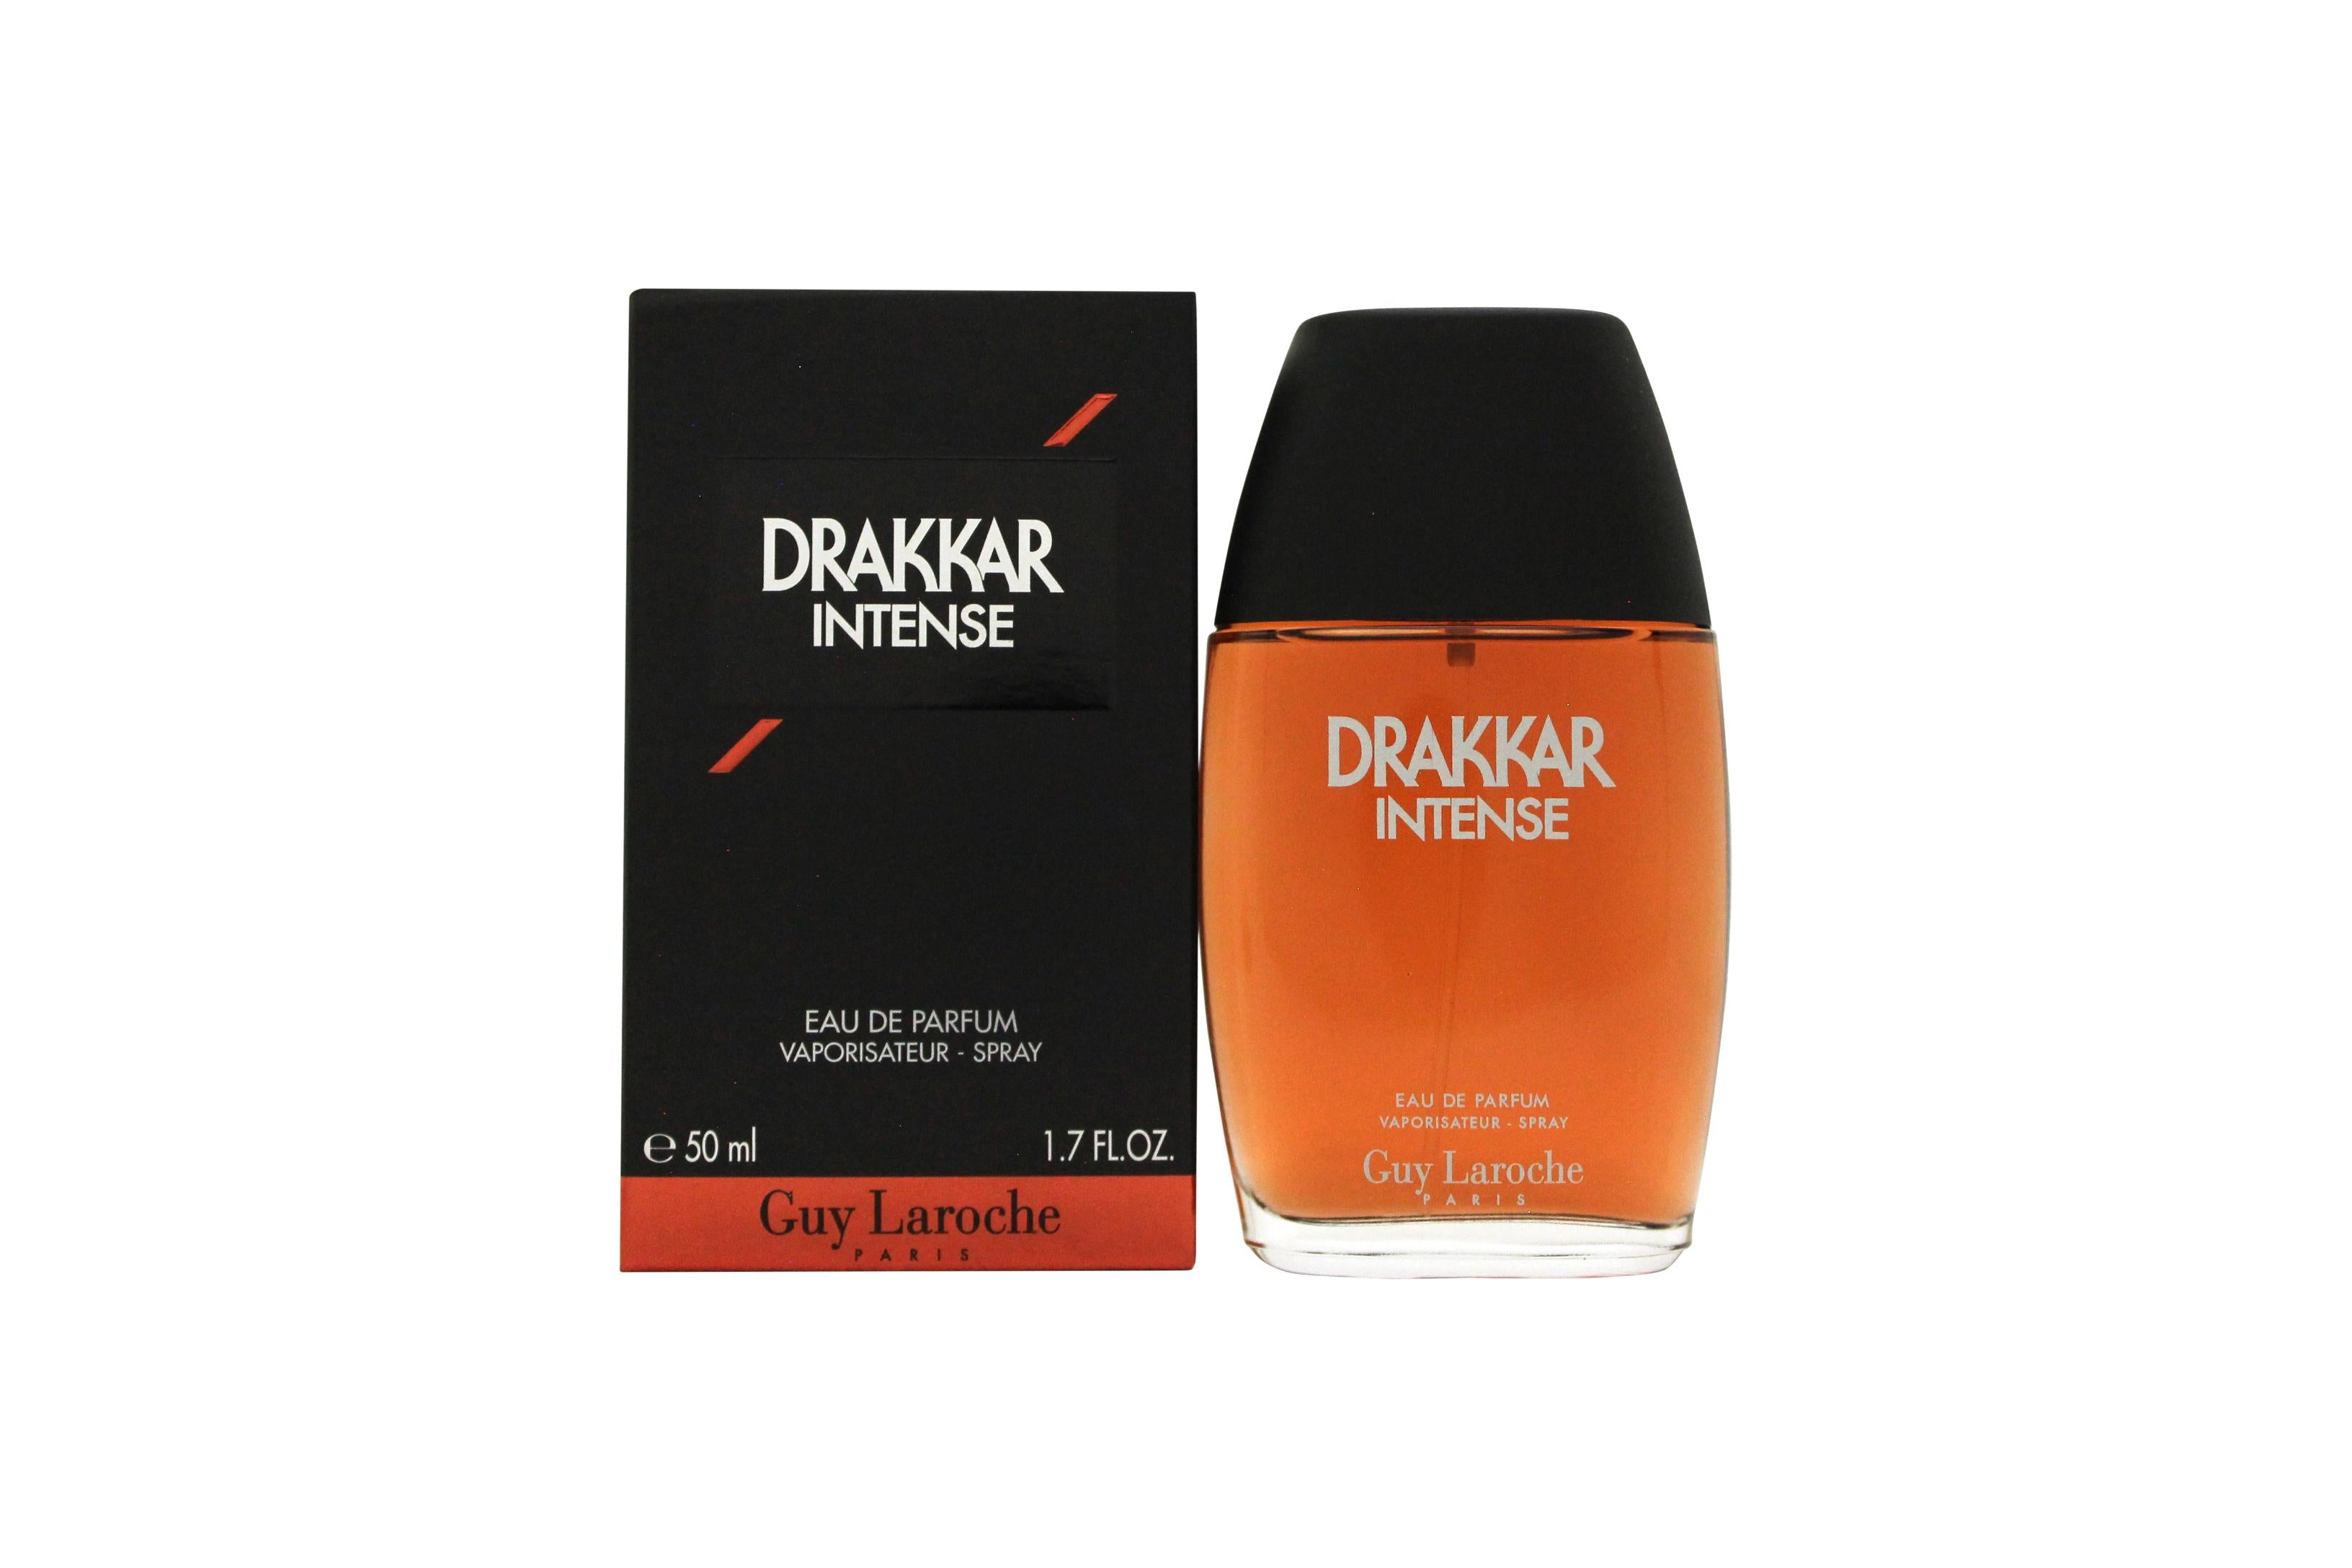 View Guy Laroche Drakkar Intense Eau de Parfum 50ml Spray information